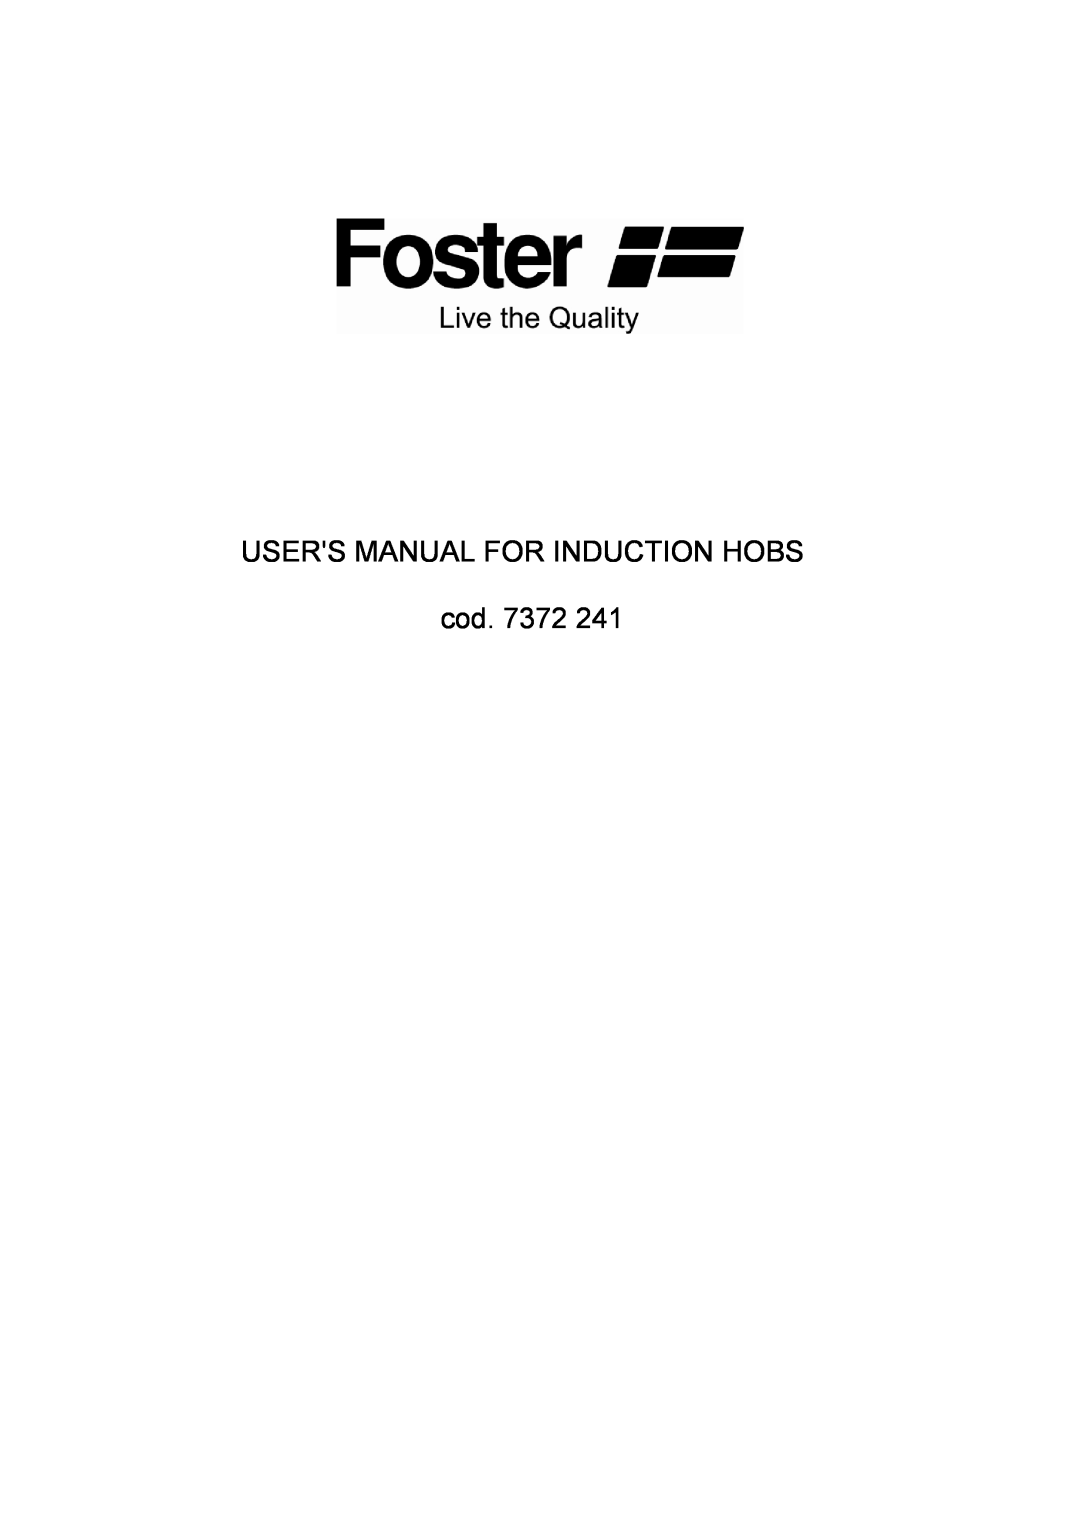 Foster 7372 241 user manual cod 